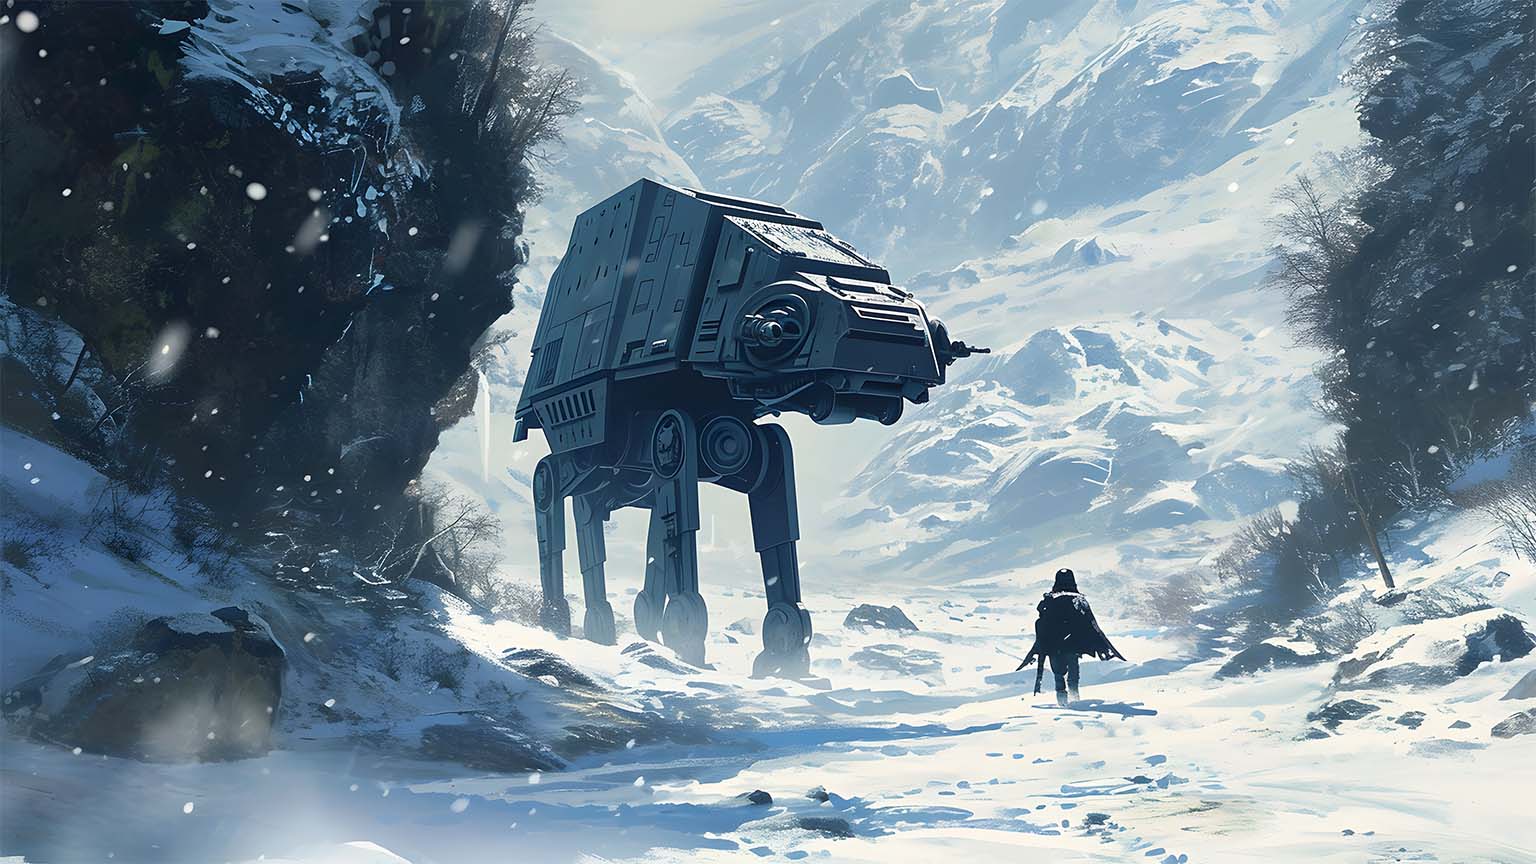 Star Wars Winter AT-AT Desktop Wallpaper - Download in HD & 4K